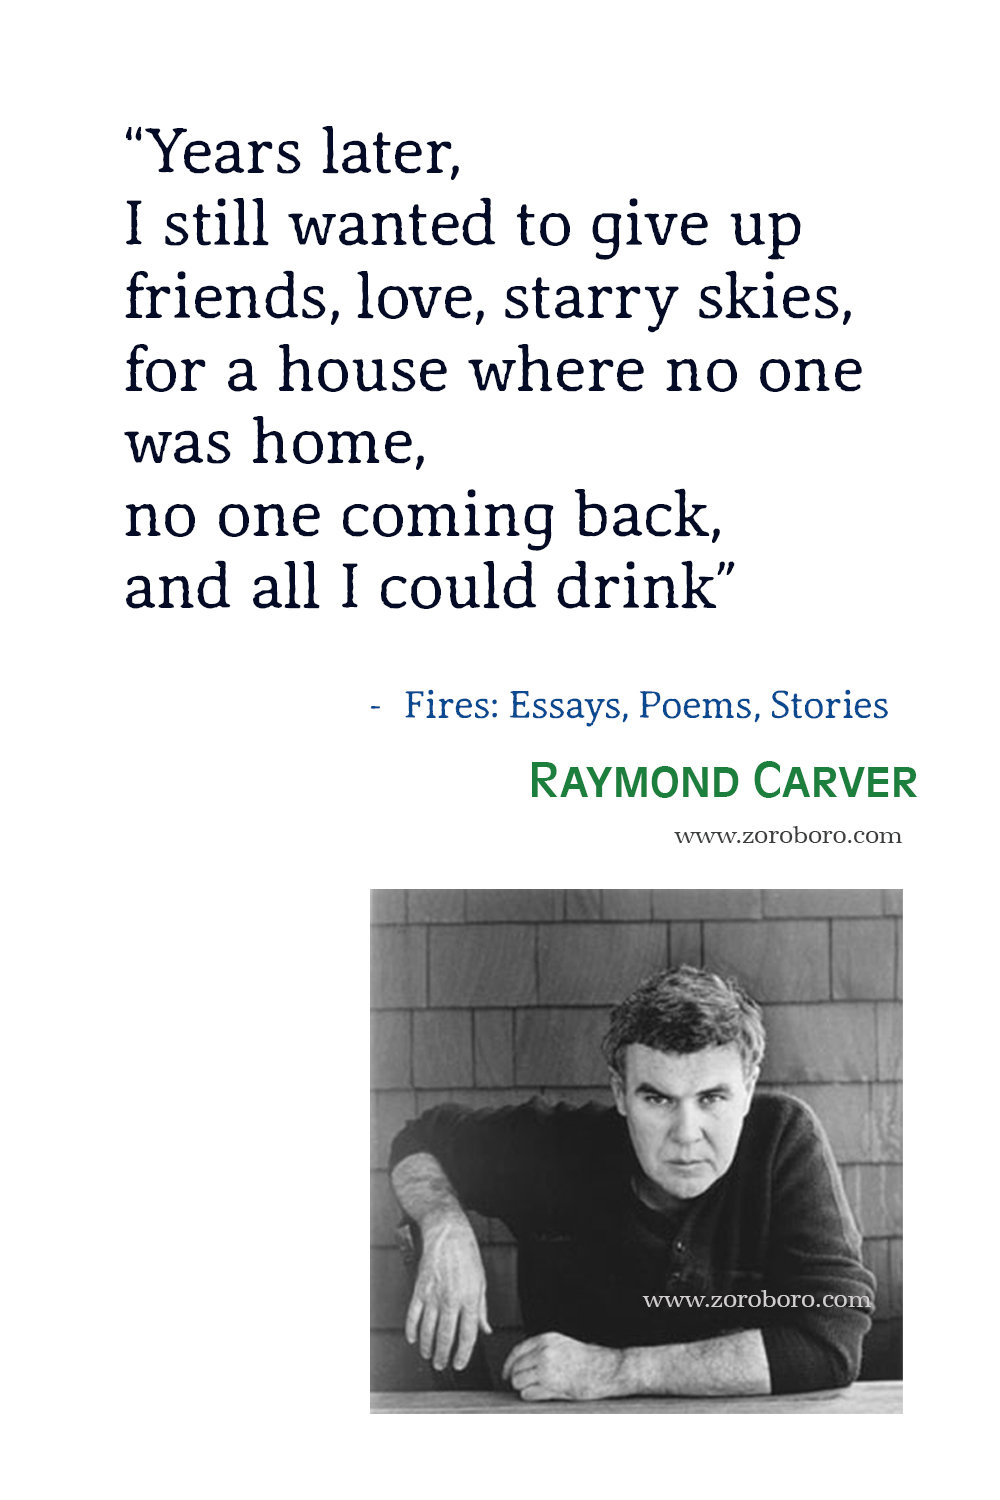 Raymond Carver Quotes, Raymond Carver Essays, Raymond Carver Poems, Raymond Carver Stories, Raymond carver What We Talk About When We Talk About Love, Raymond carver cathedral, Books.